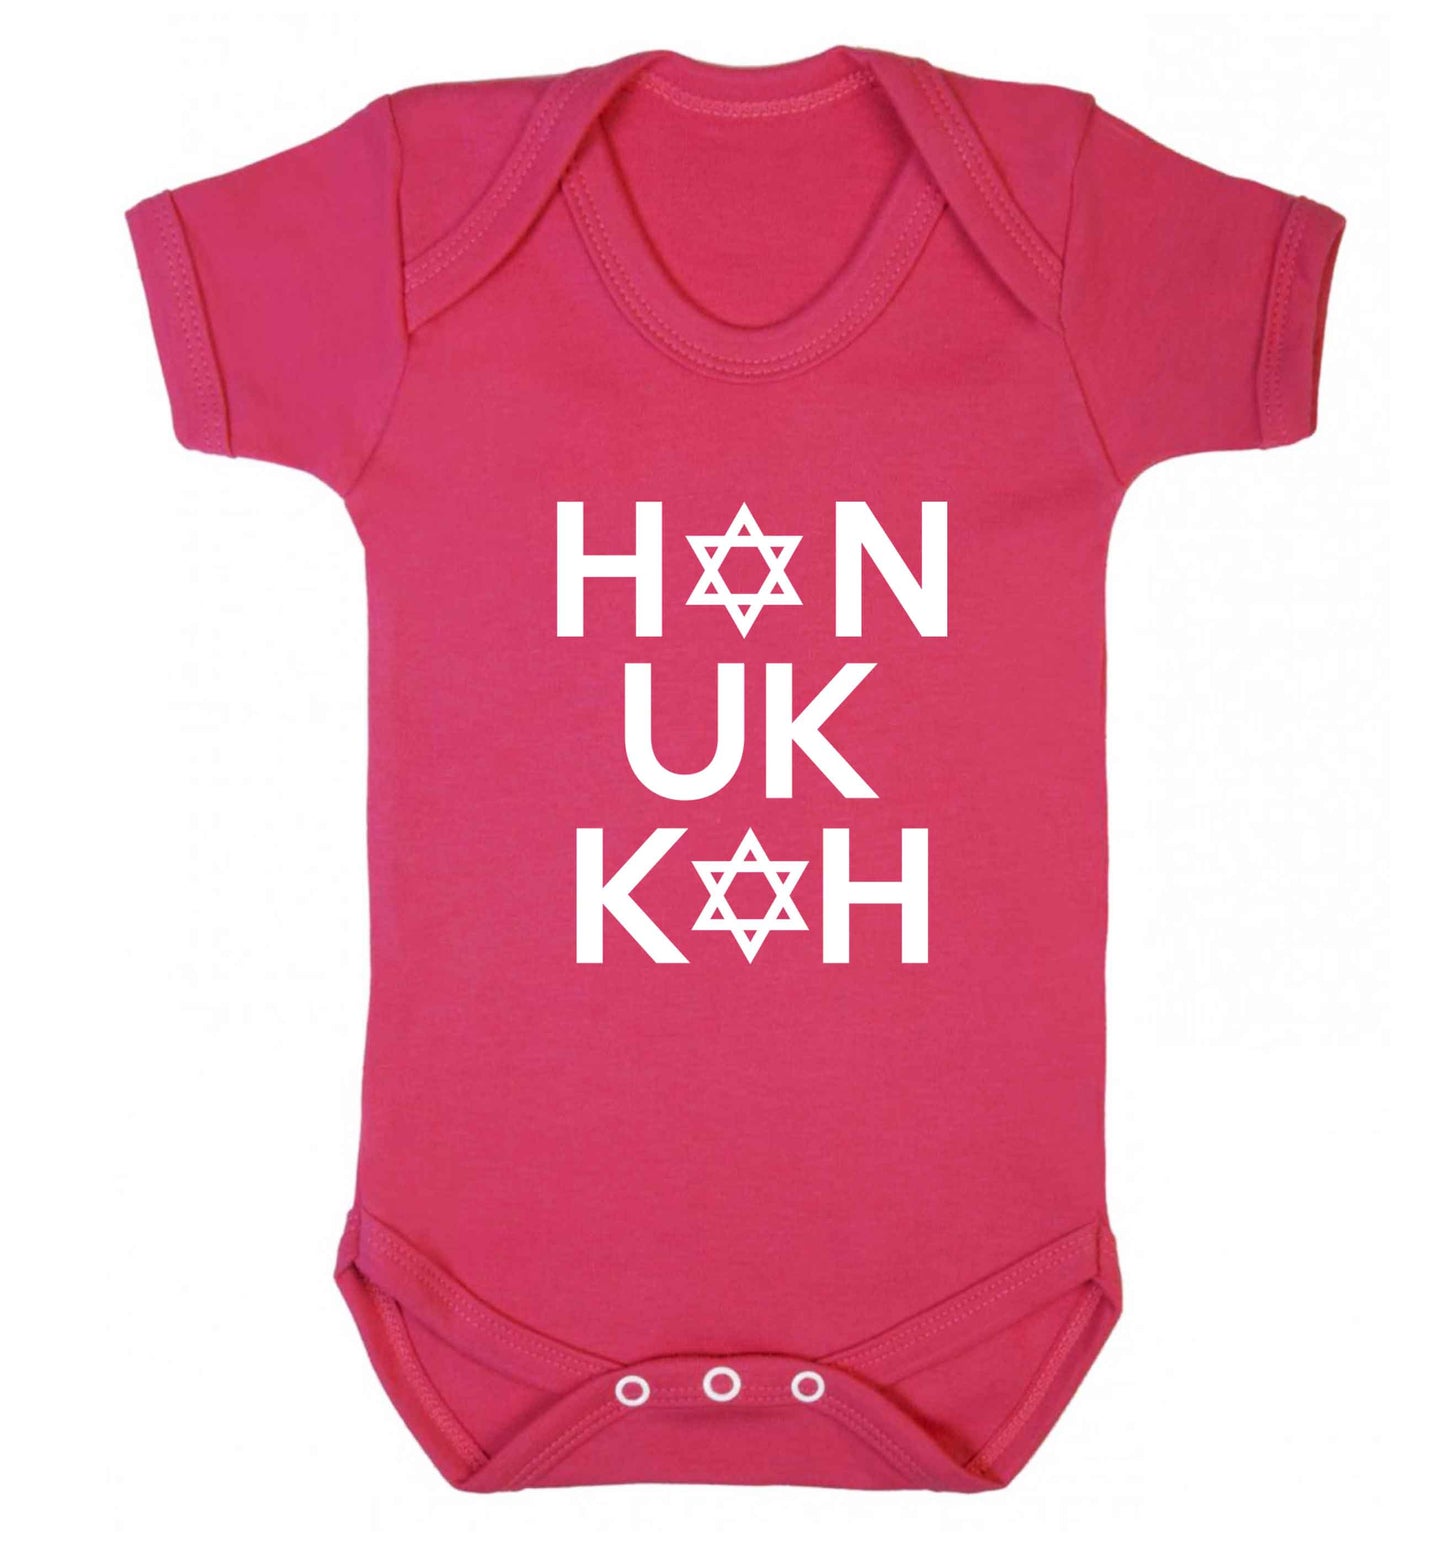 Han uk kah  Hanukkah star of david baby vest dark pink 18-24 months